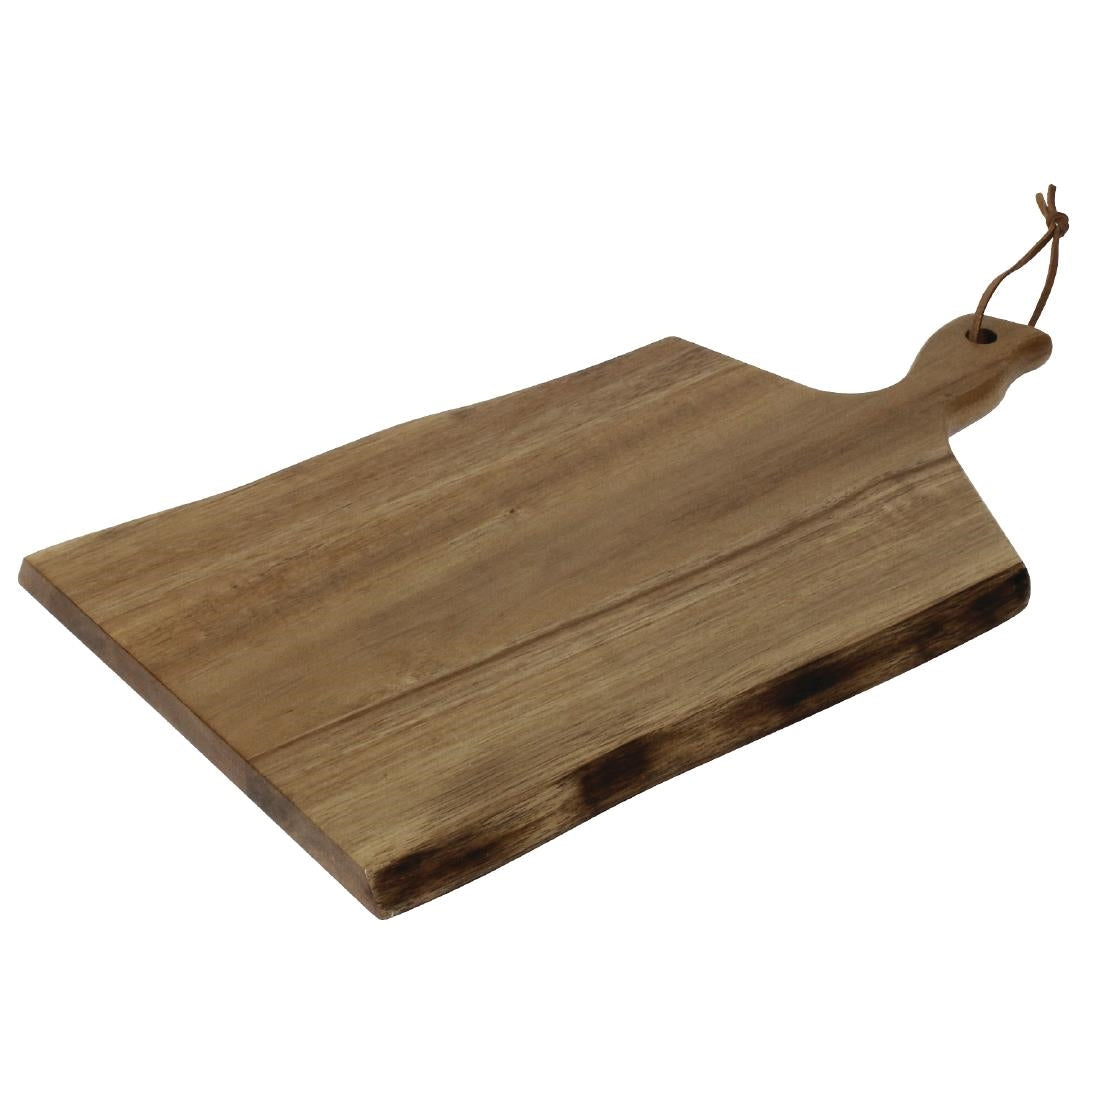 GM263 Olympia Acacia Wood Wavy Handled Wooden Board Small 305mm